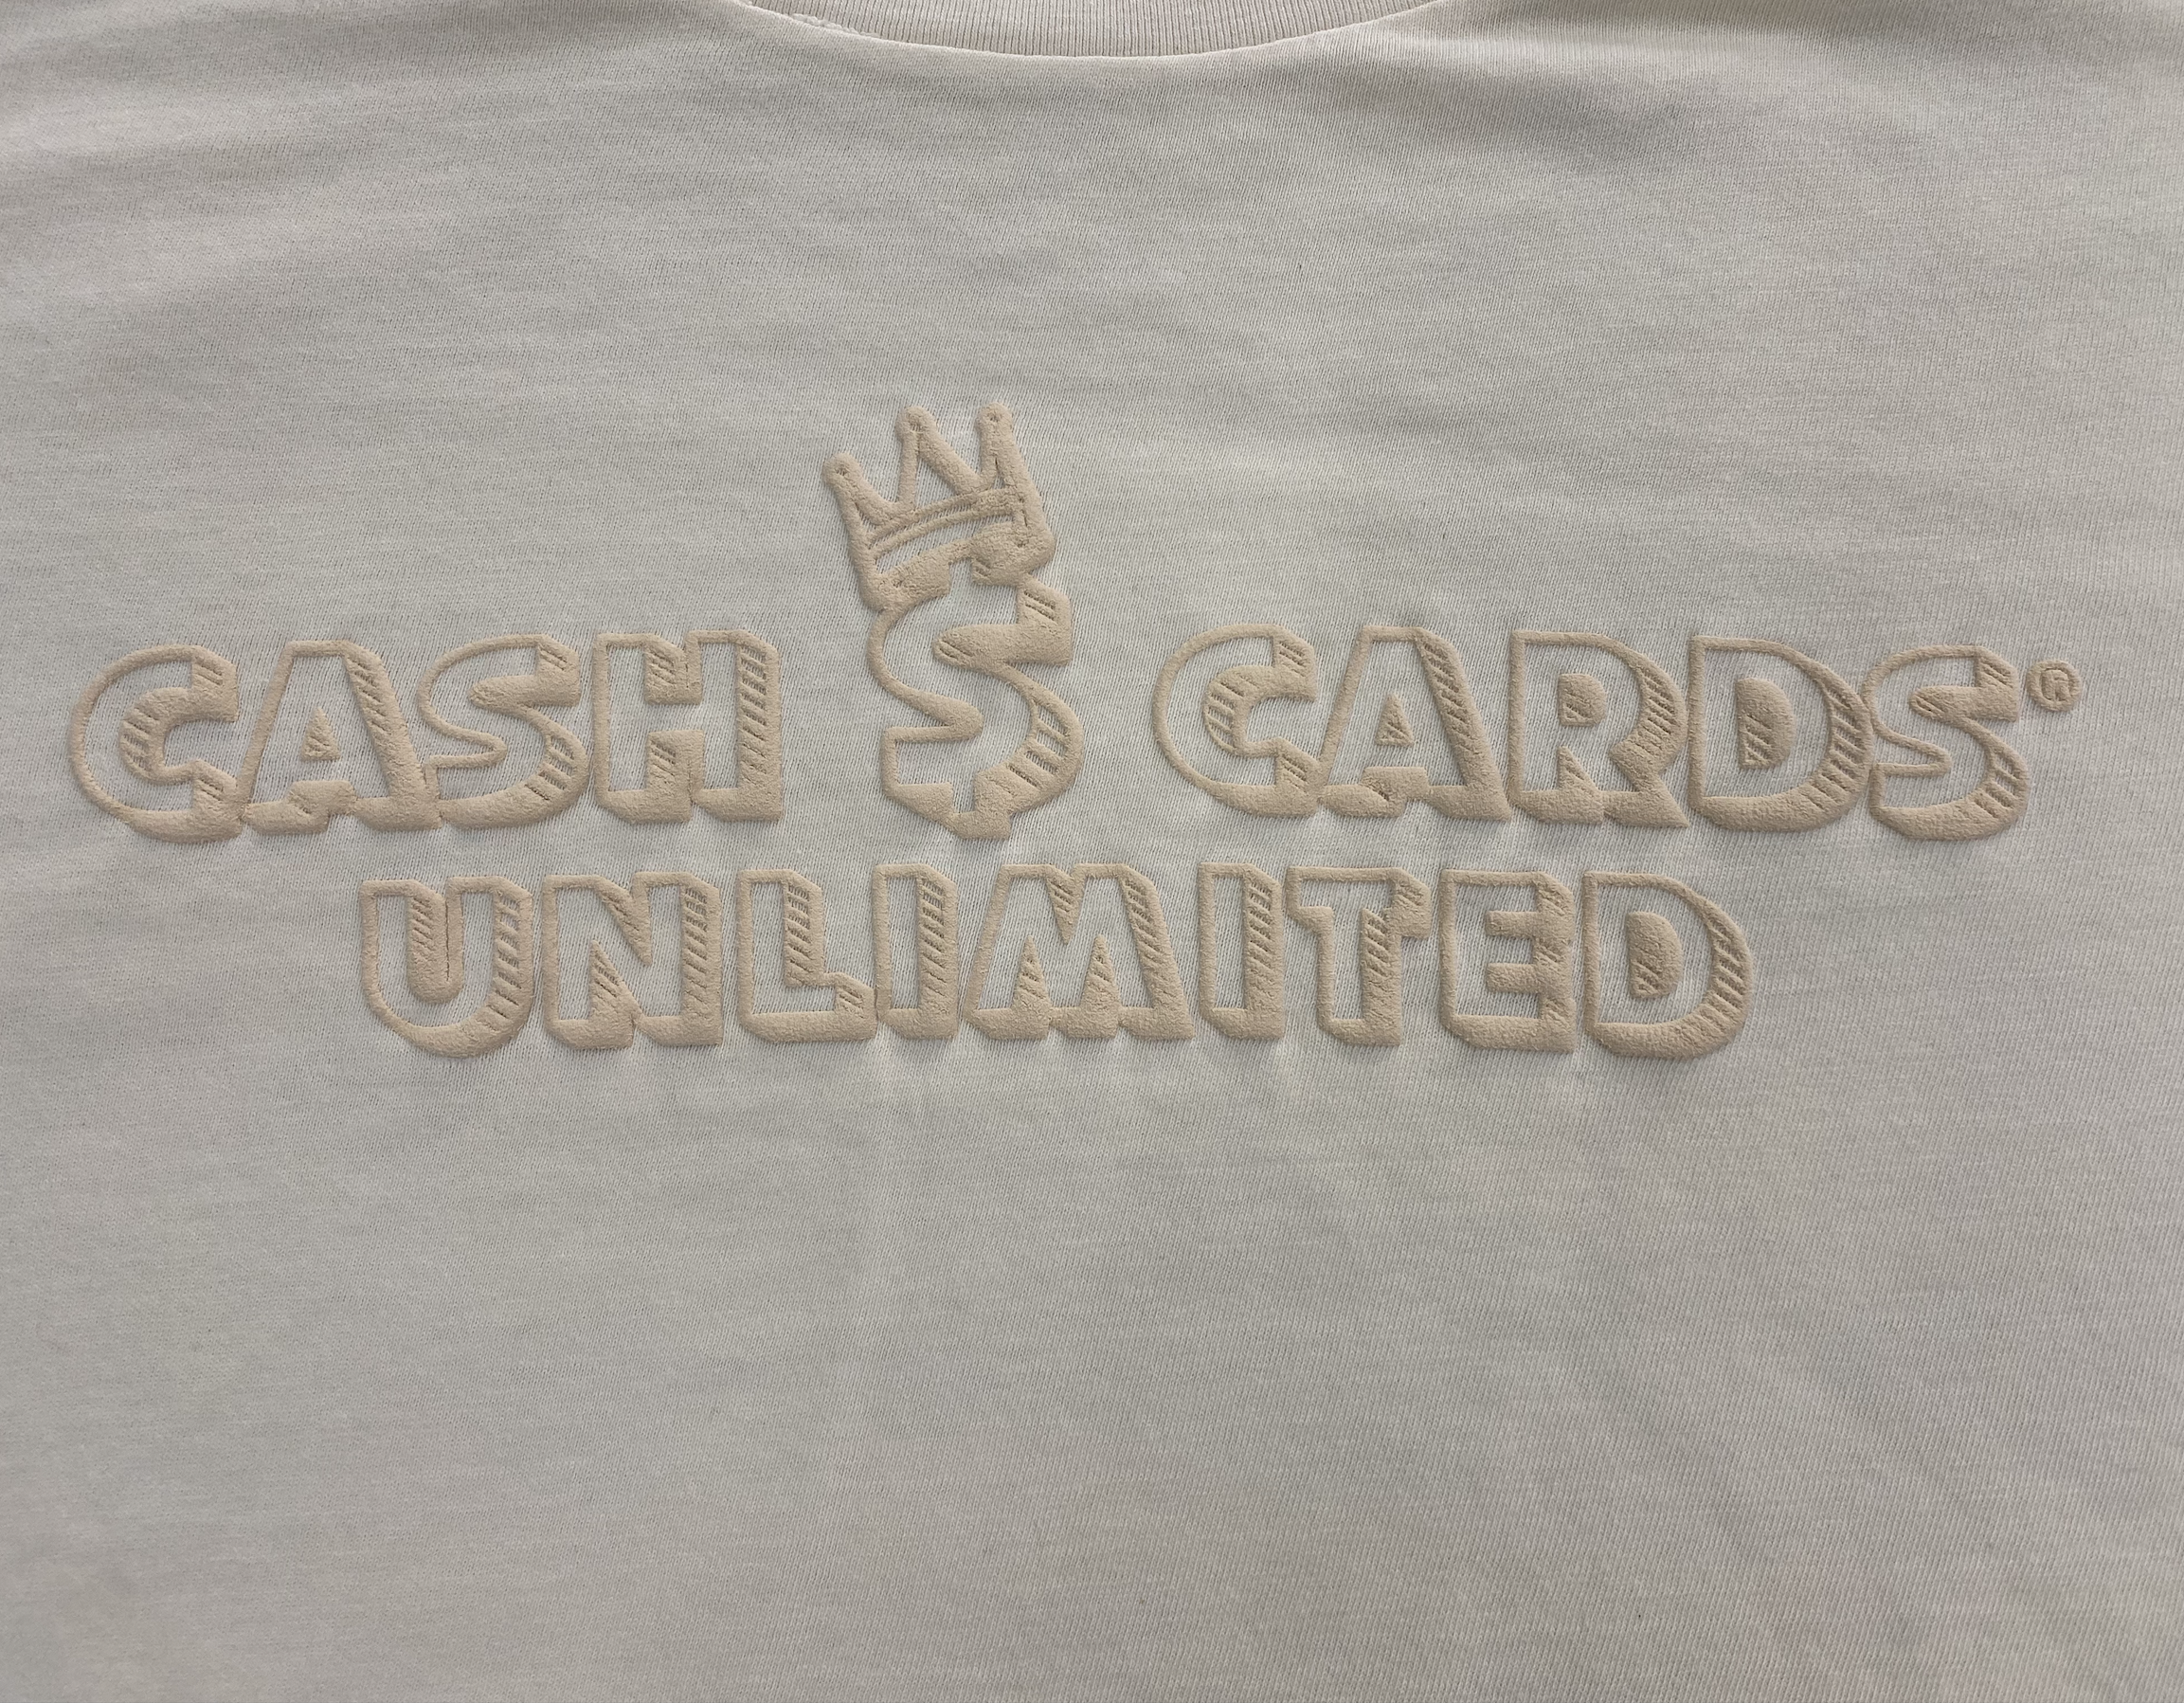 Cash Cards Unlimited Street Wear T-Shirt (Off-White/Medium)